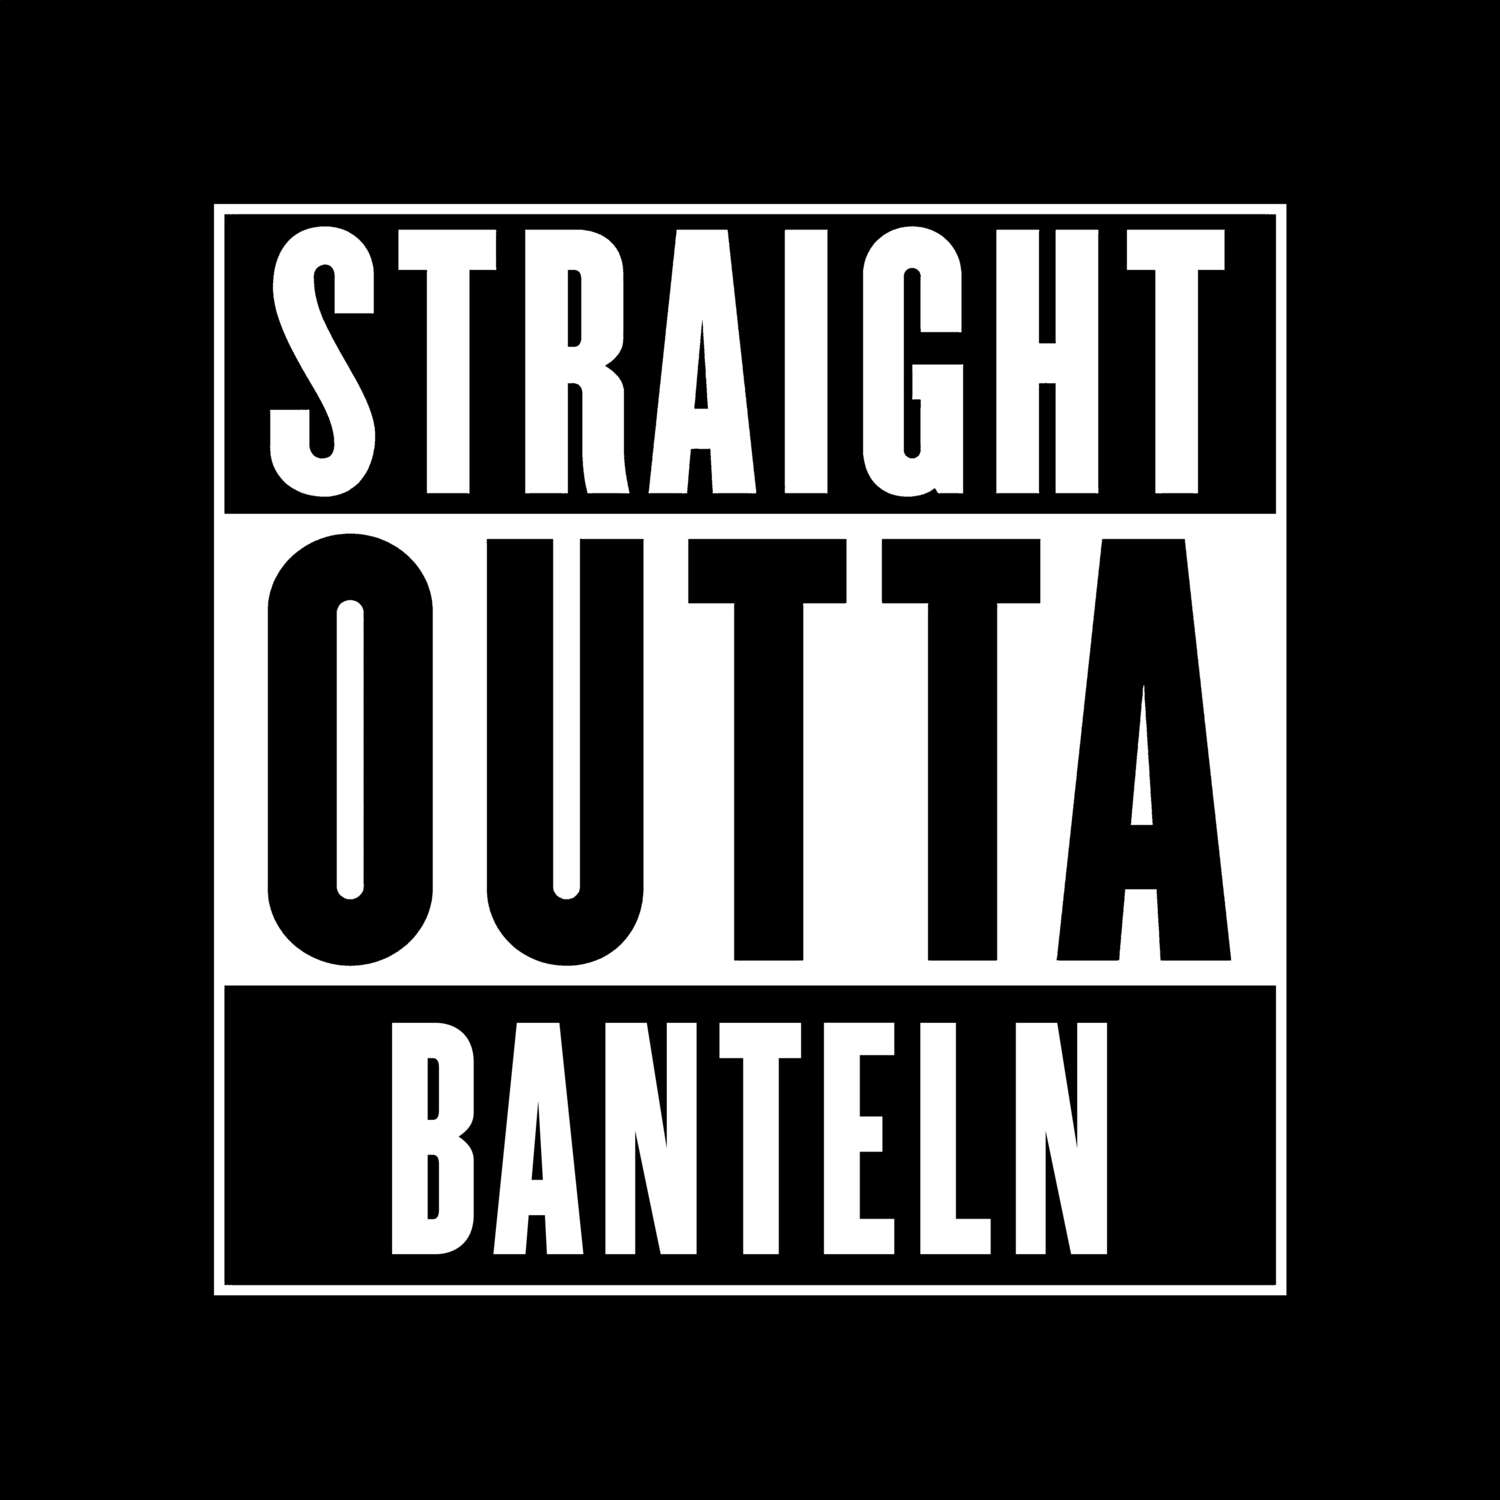 Banteln T-Shirt »Straight Outta«